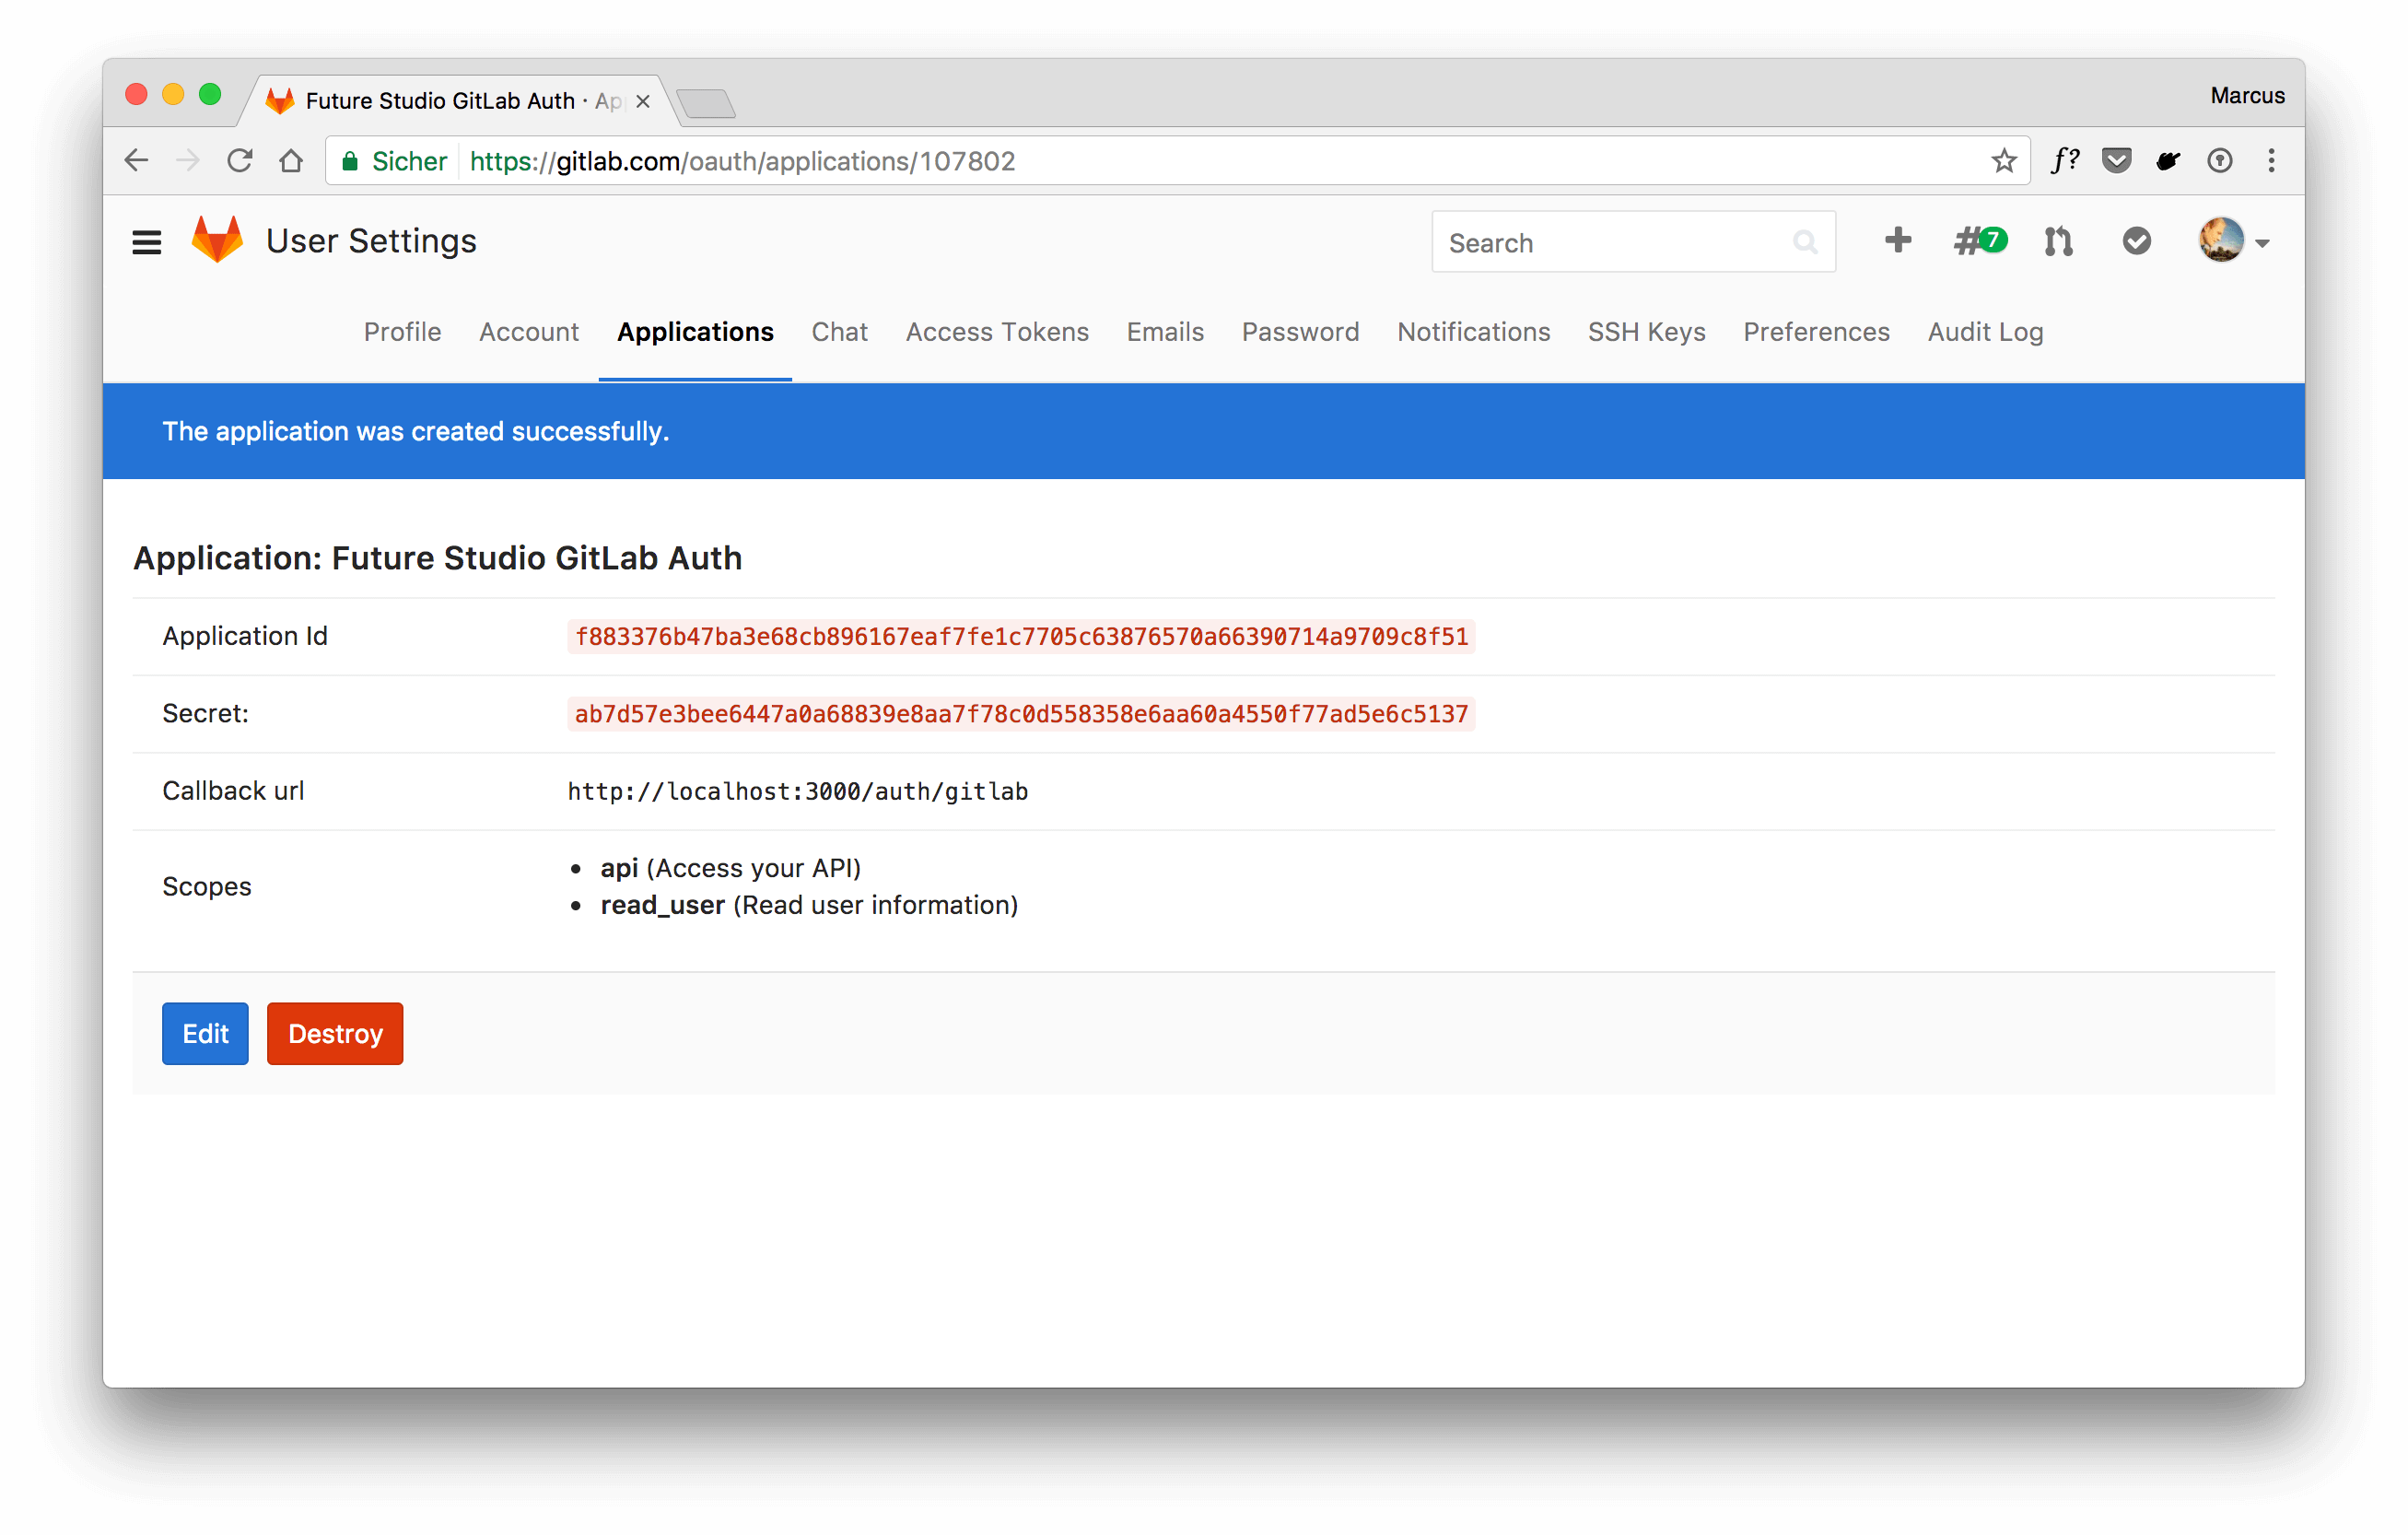 New GitLab OAuth Application